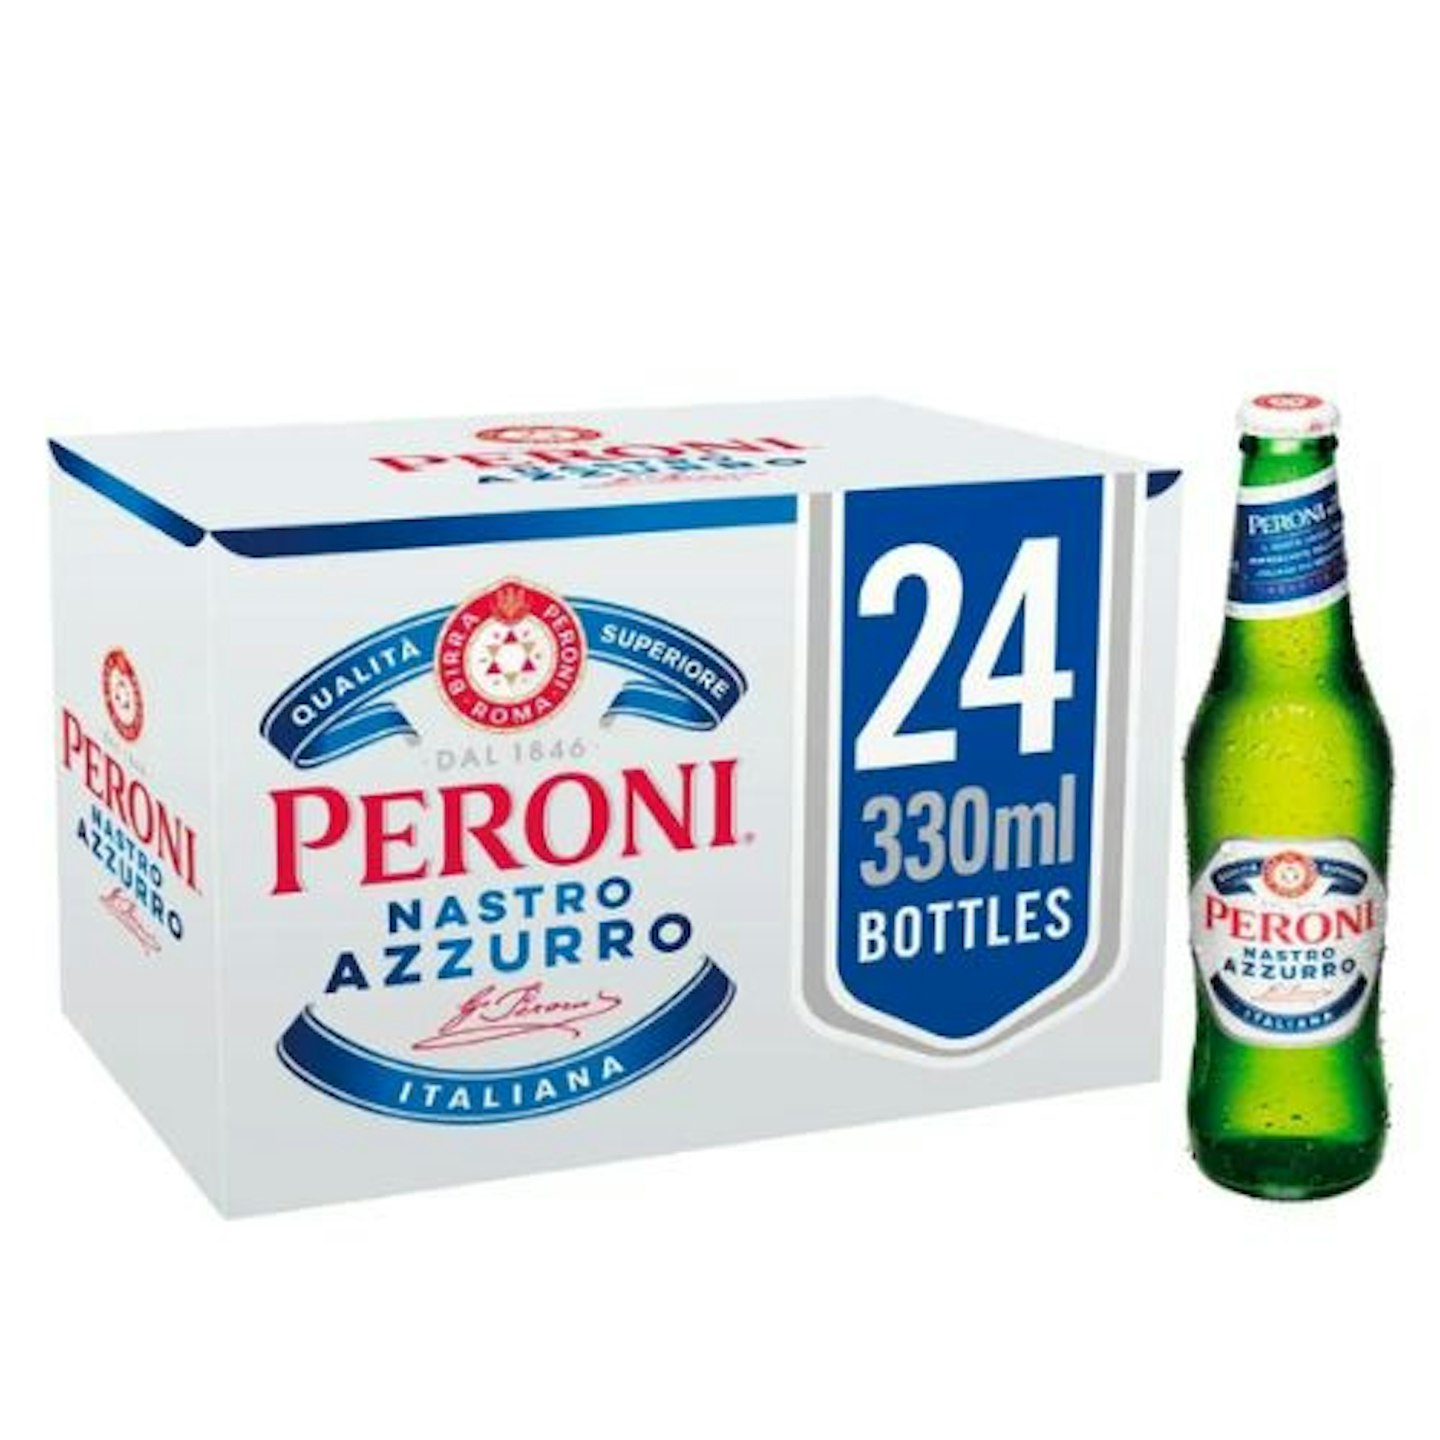 Peroni Nastro Azzurro Premium Lager